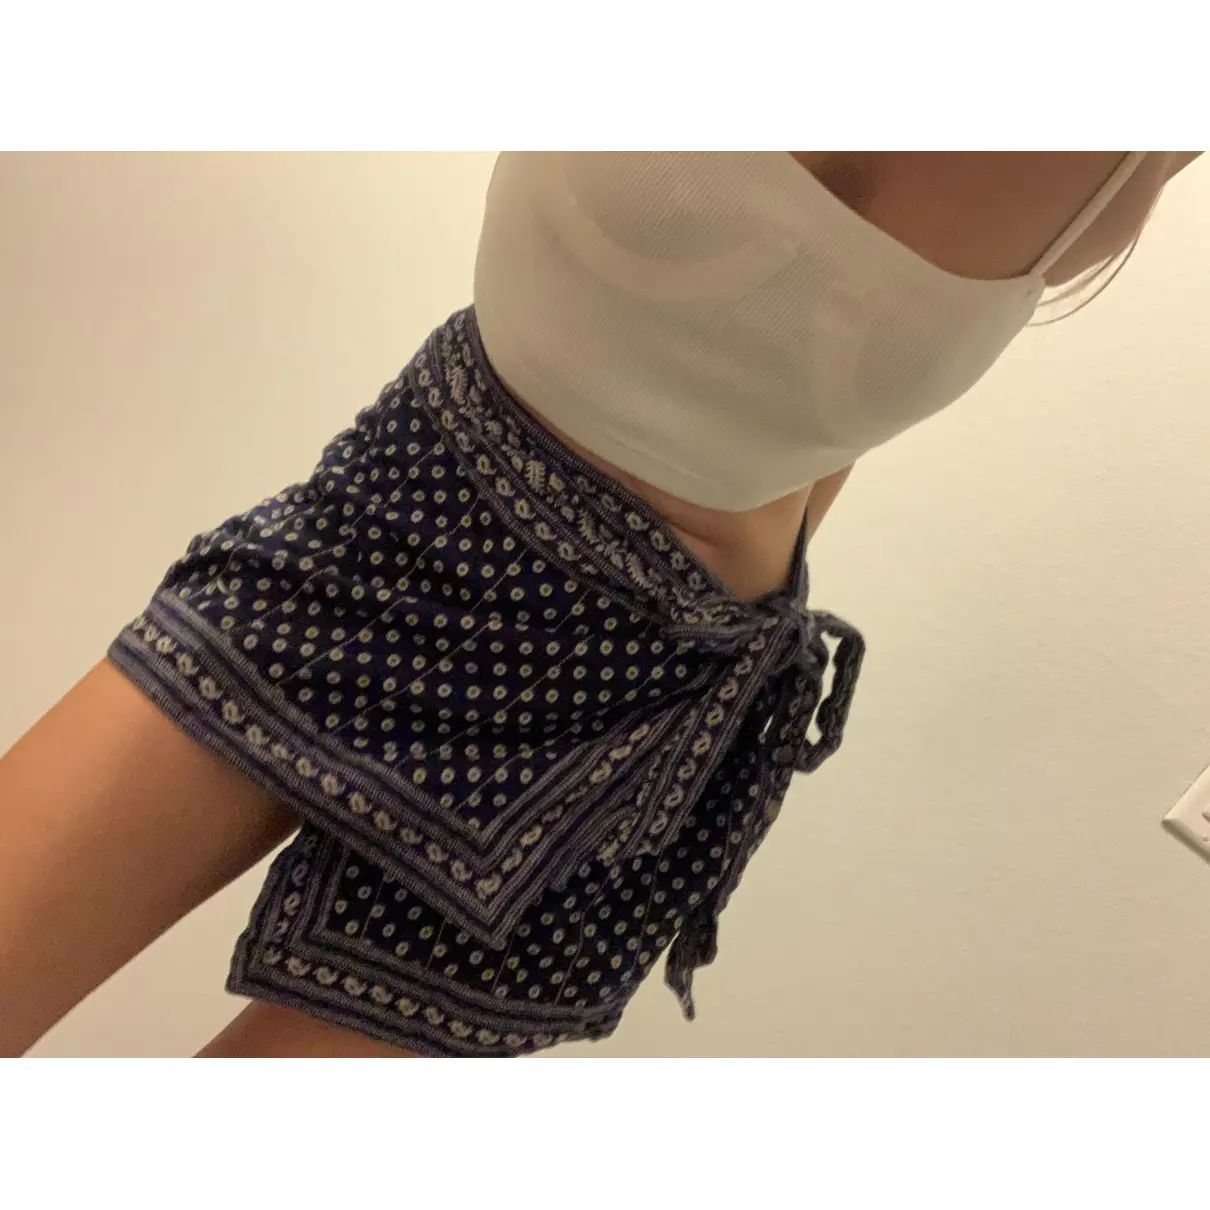 Mini skirt Isabel Marant Etoile